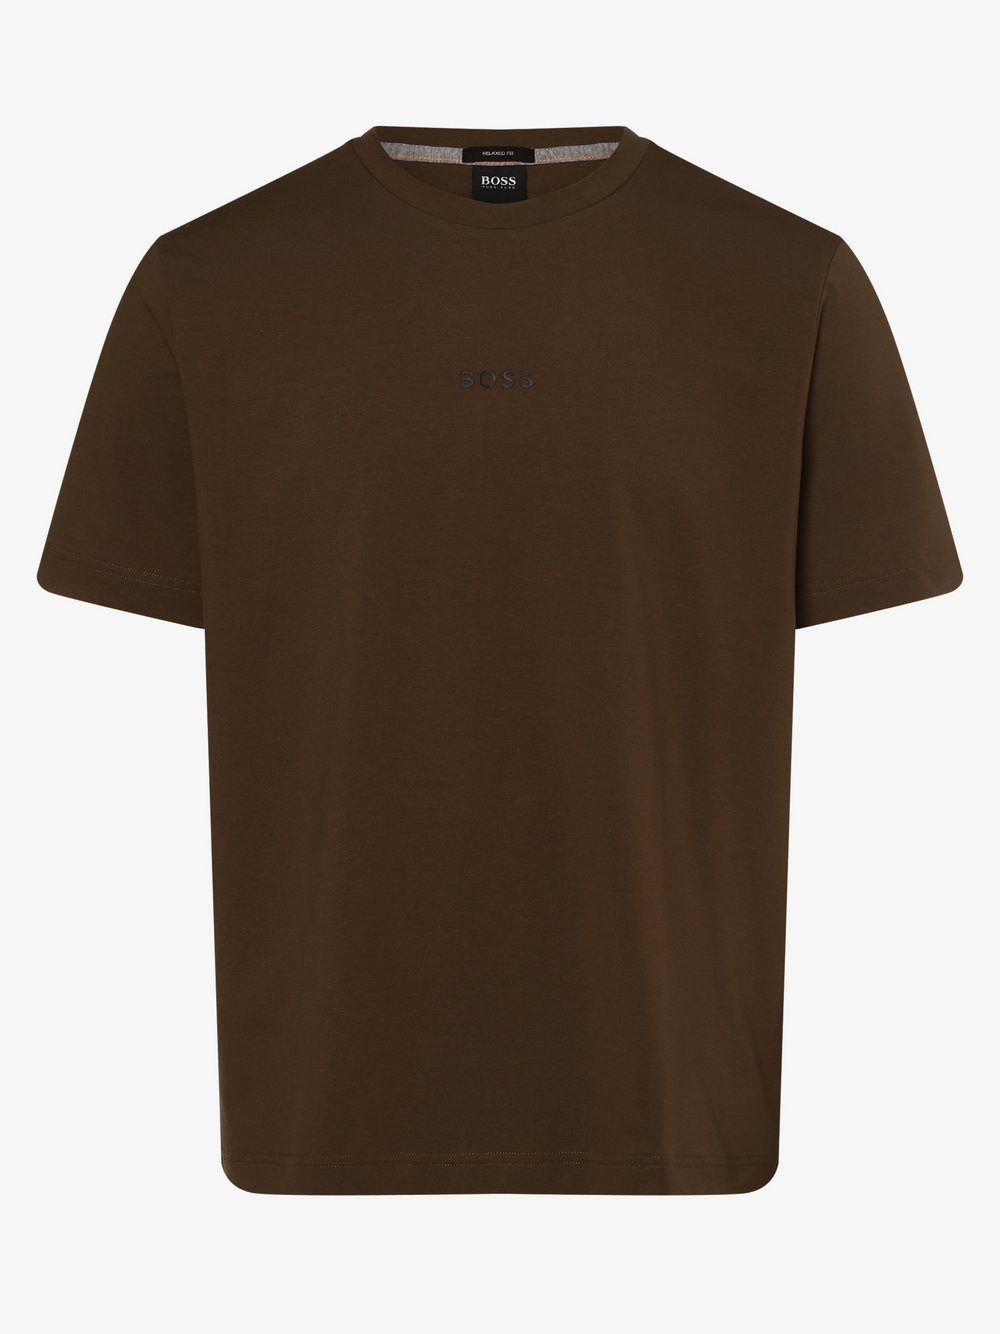 BOSS Casual - T-shirt męski – TChup 1, zielony